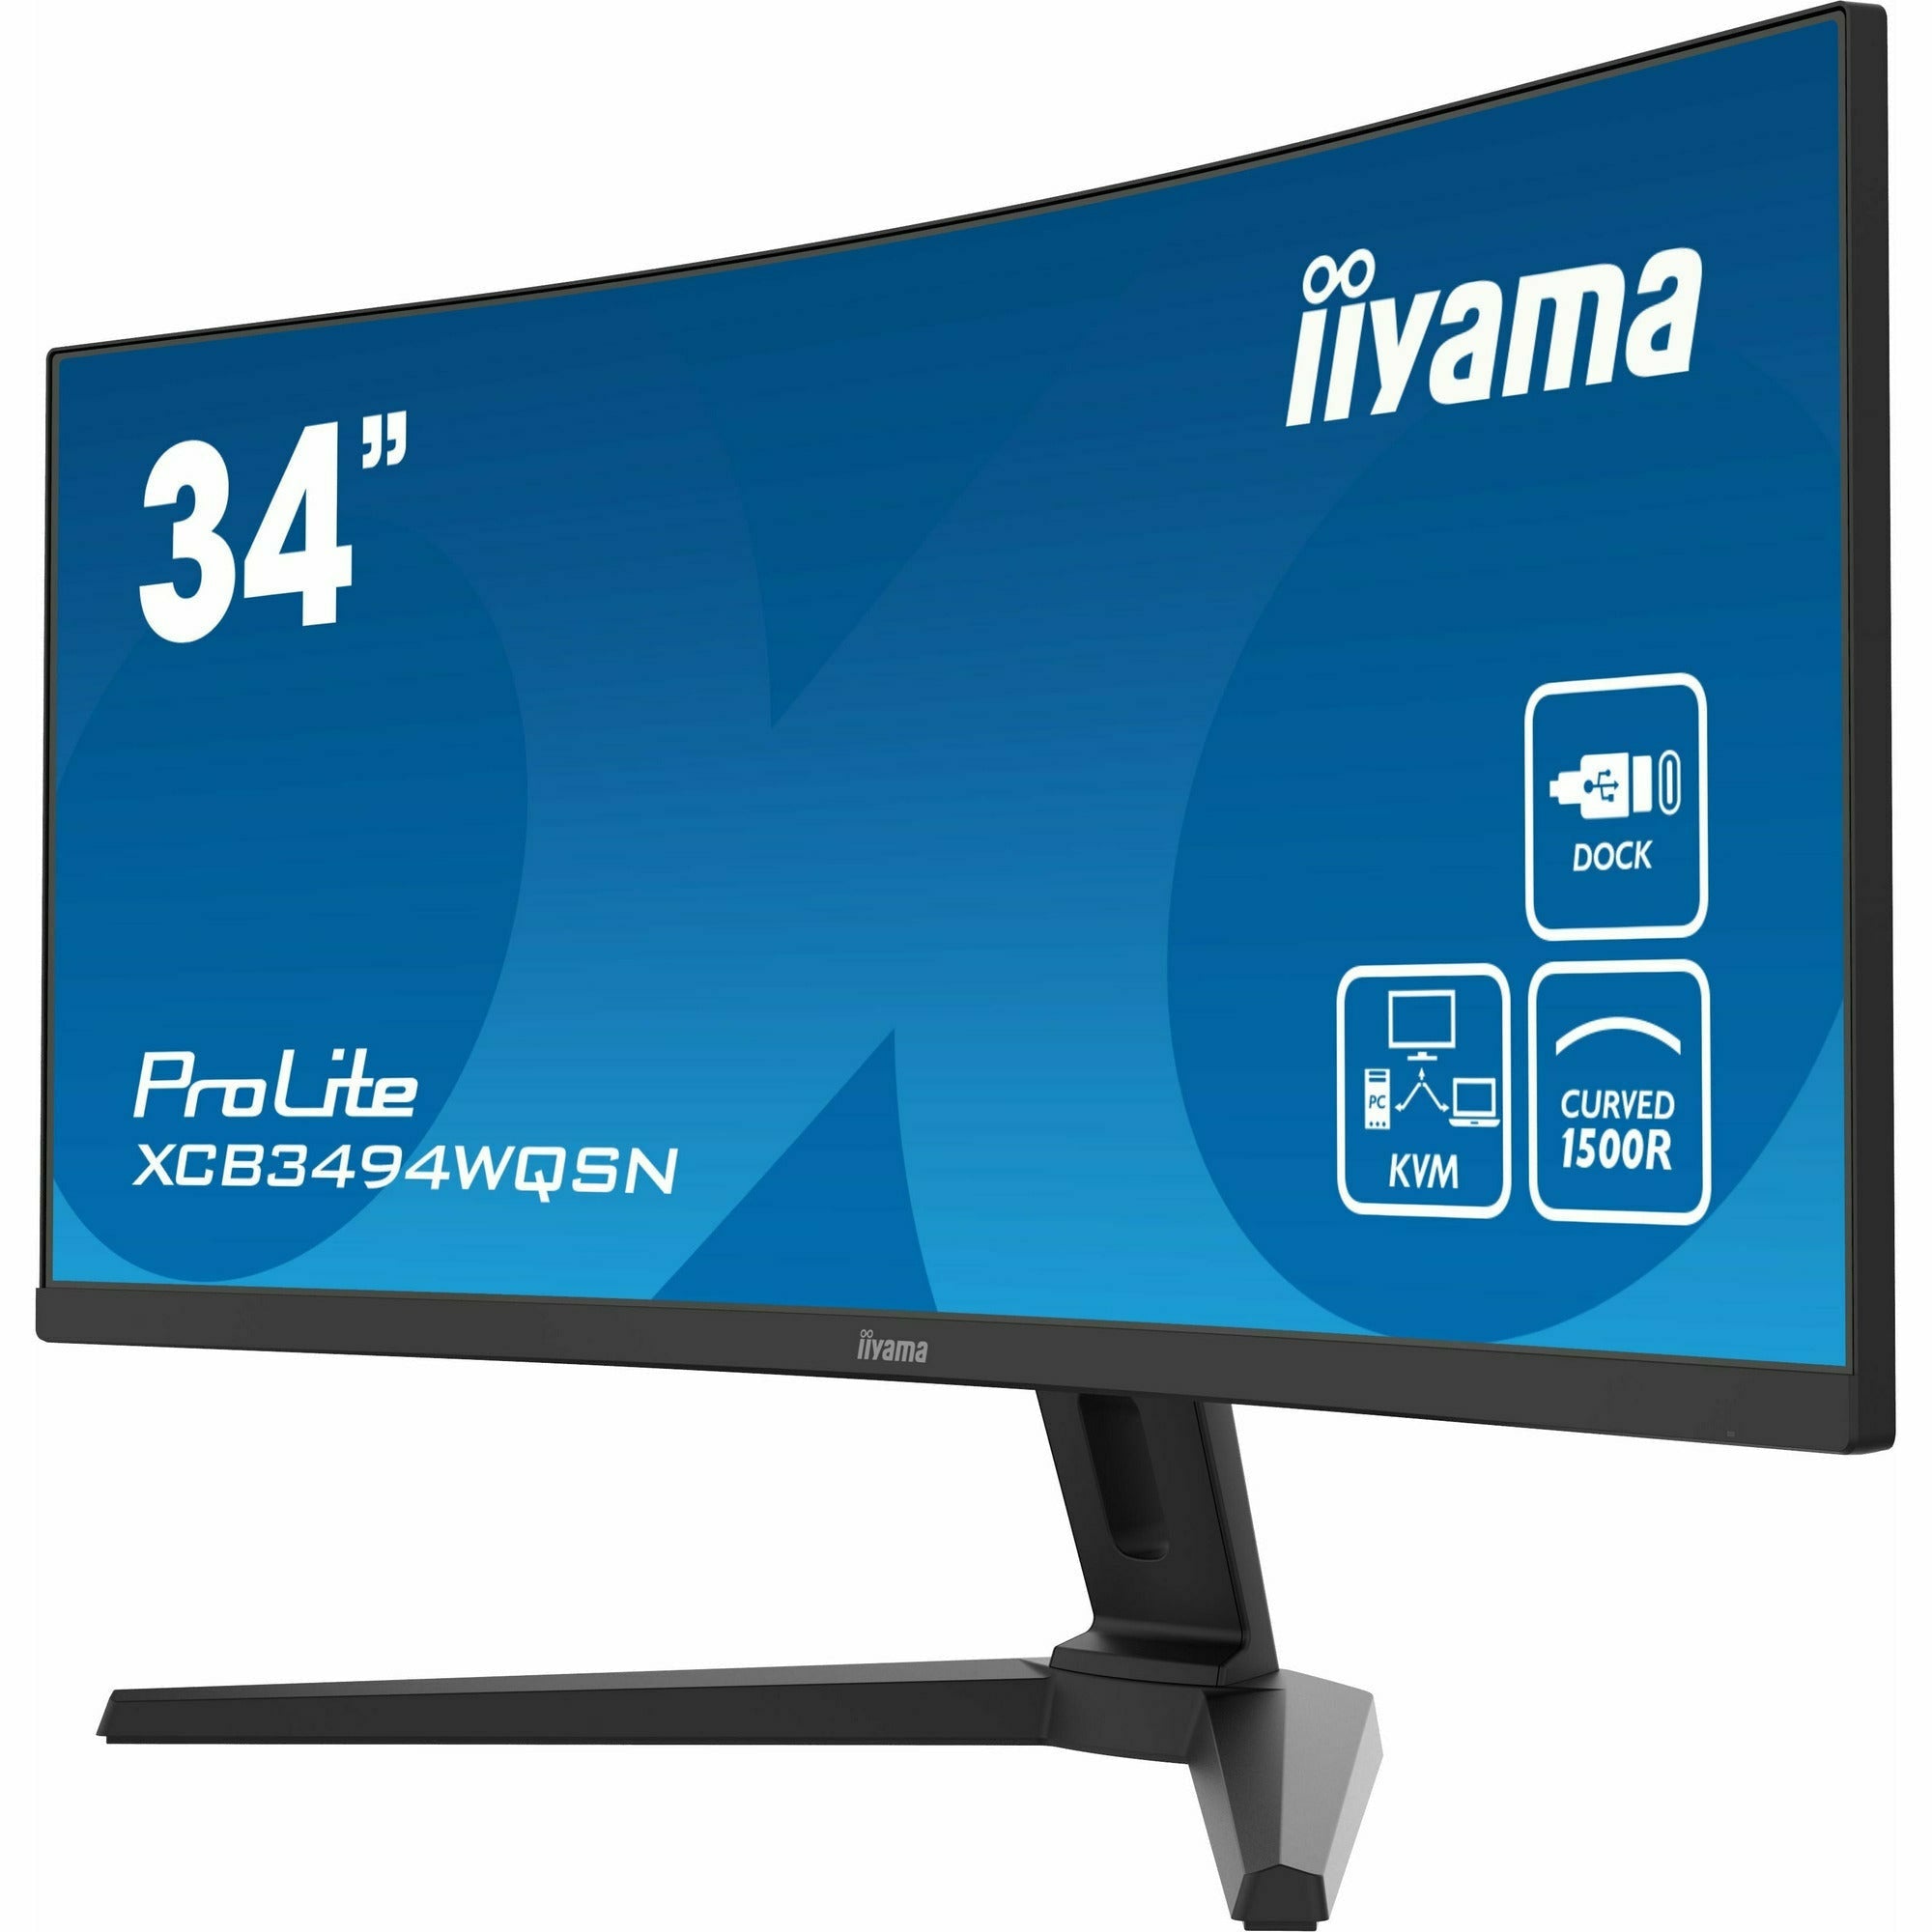 iiyama ProLite XCB3494WQSN-B1 34" 1500R Curved Monitor with USB-C Dock and KVM Switch